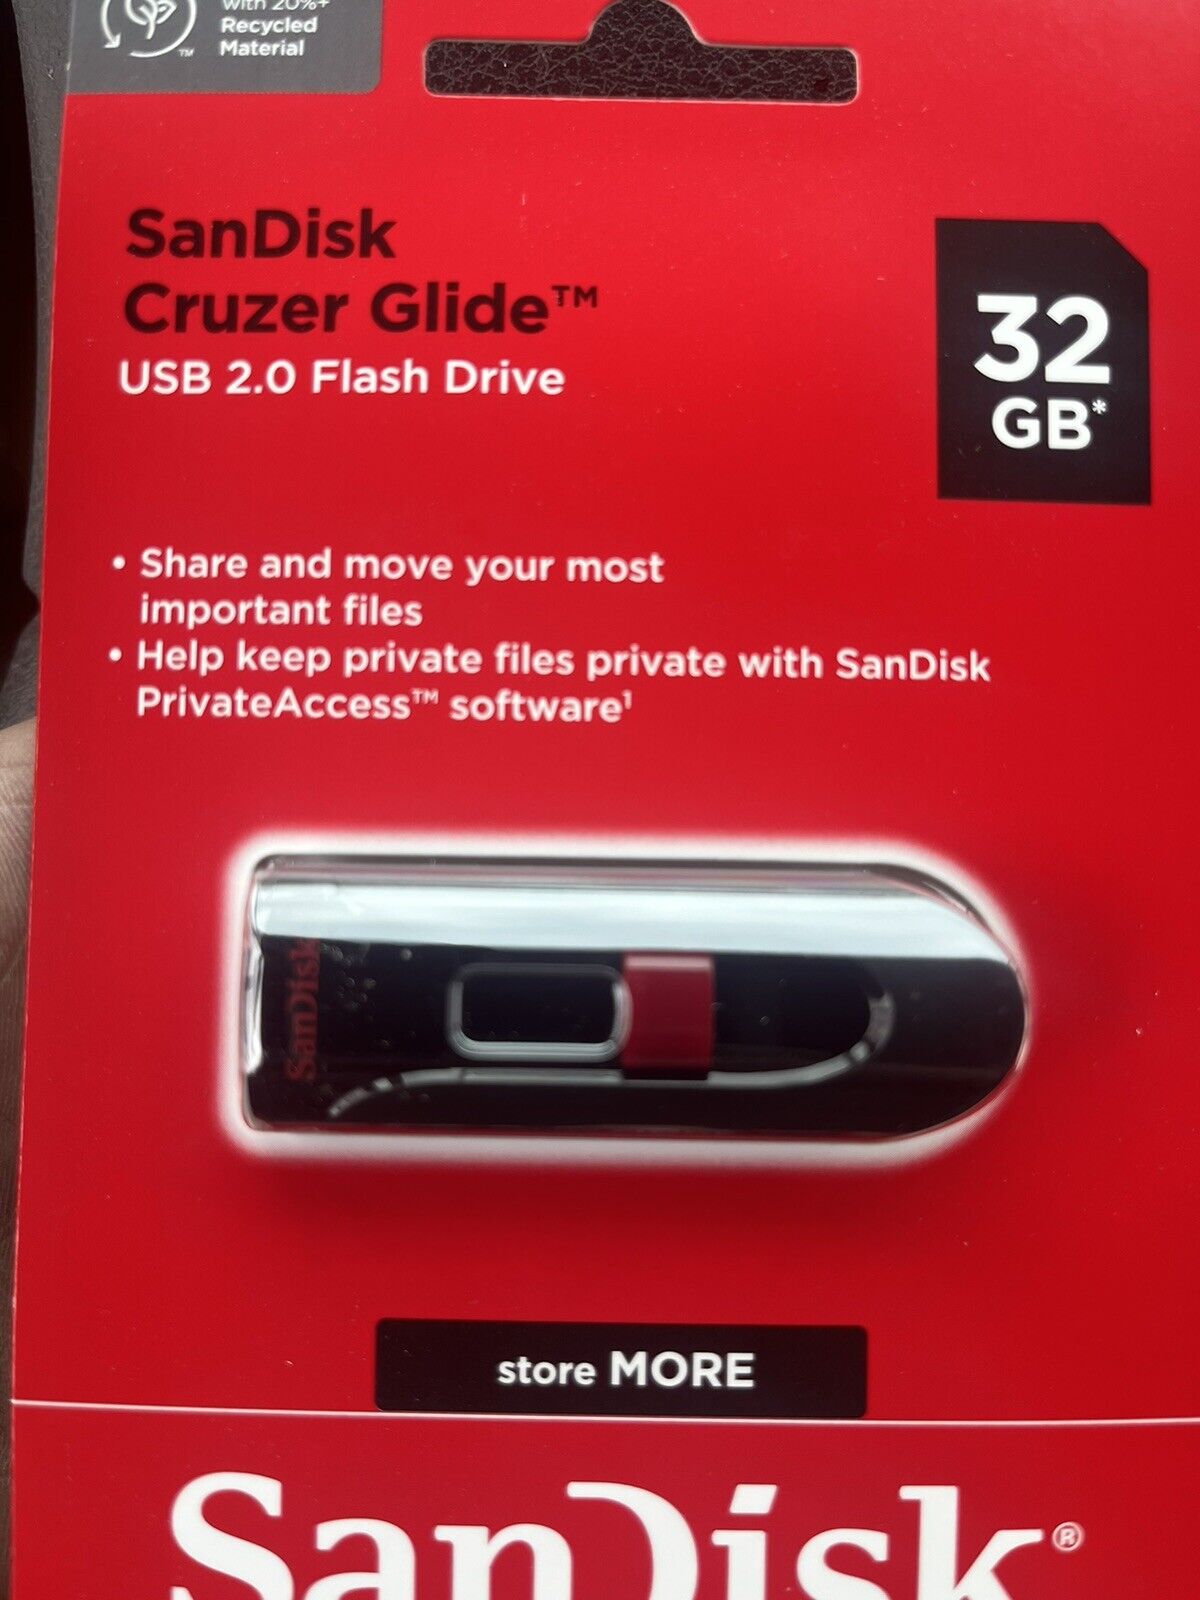 Sandisk Cruzer Glide. USB 2.0 FlSh Drive. 32 GB ( SDCZ60-032G-AW46) New. Sealed